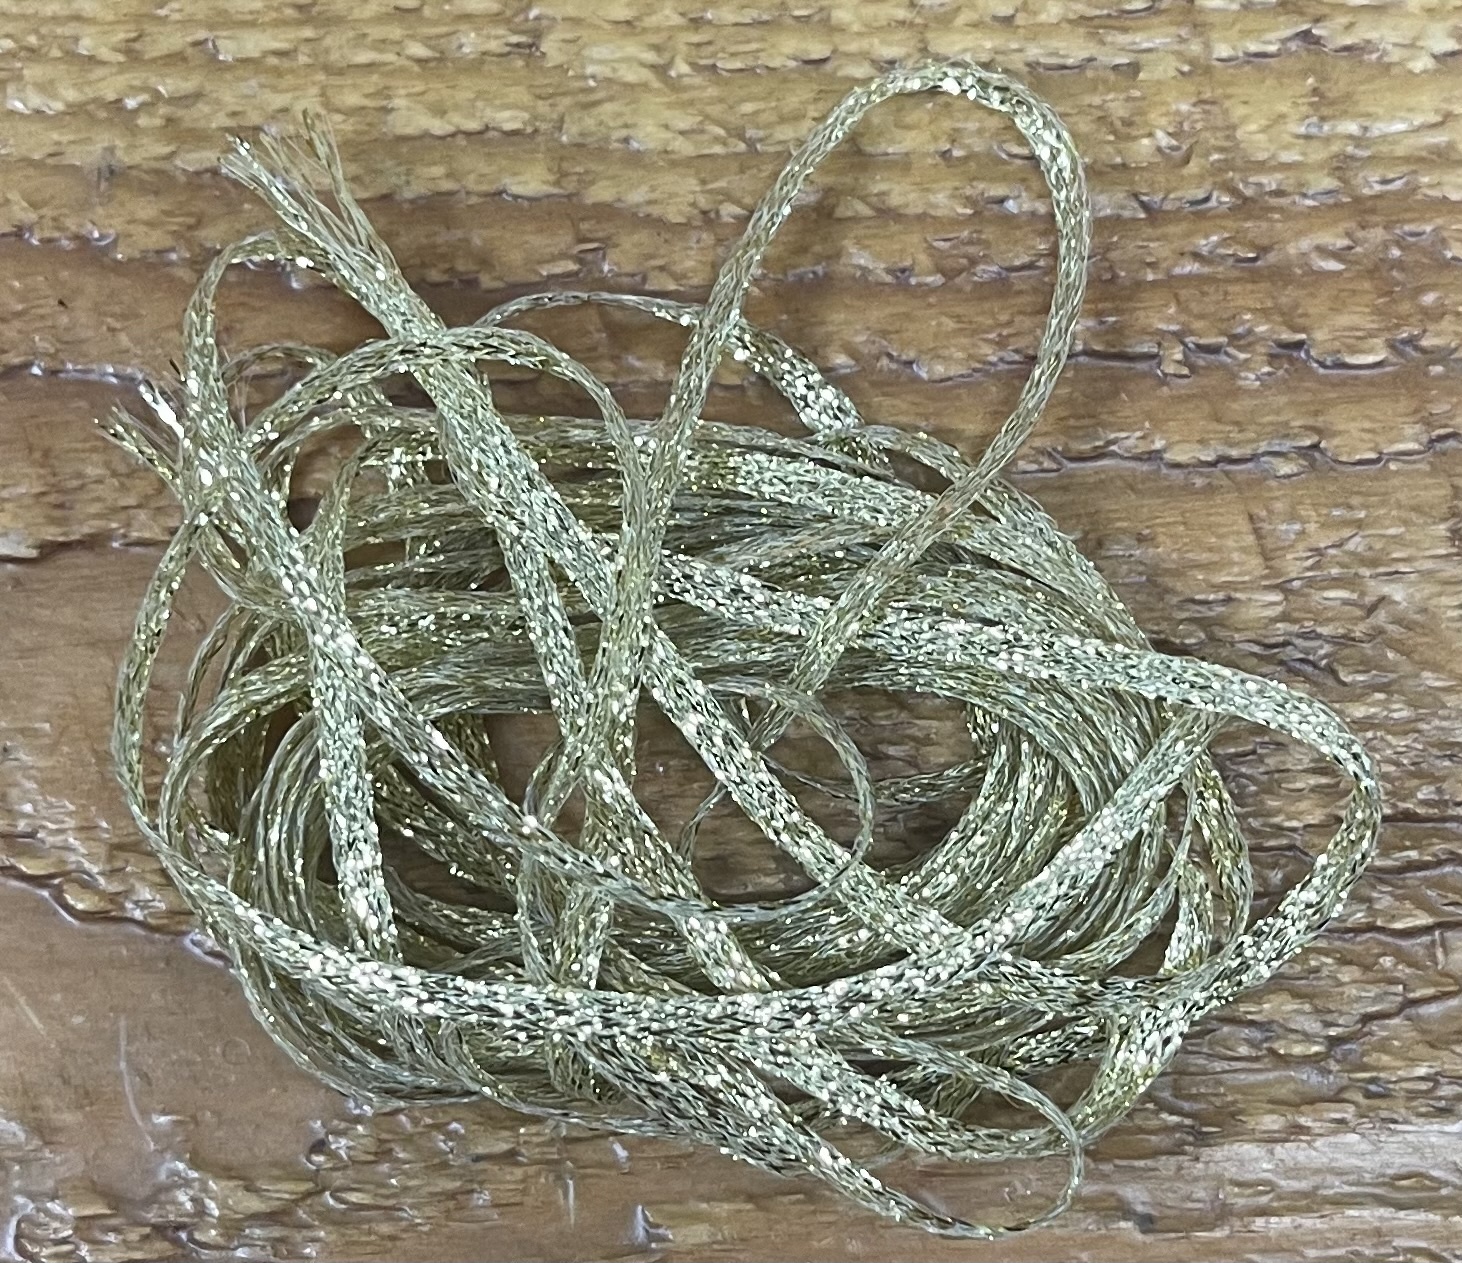 Photograph of a flat diamond braid